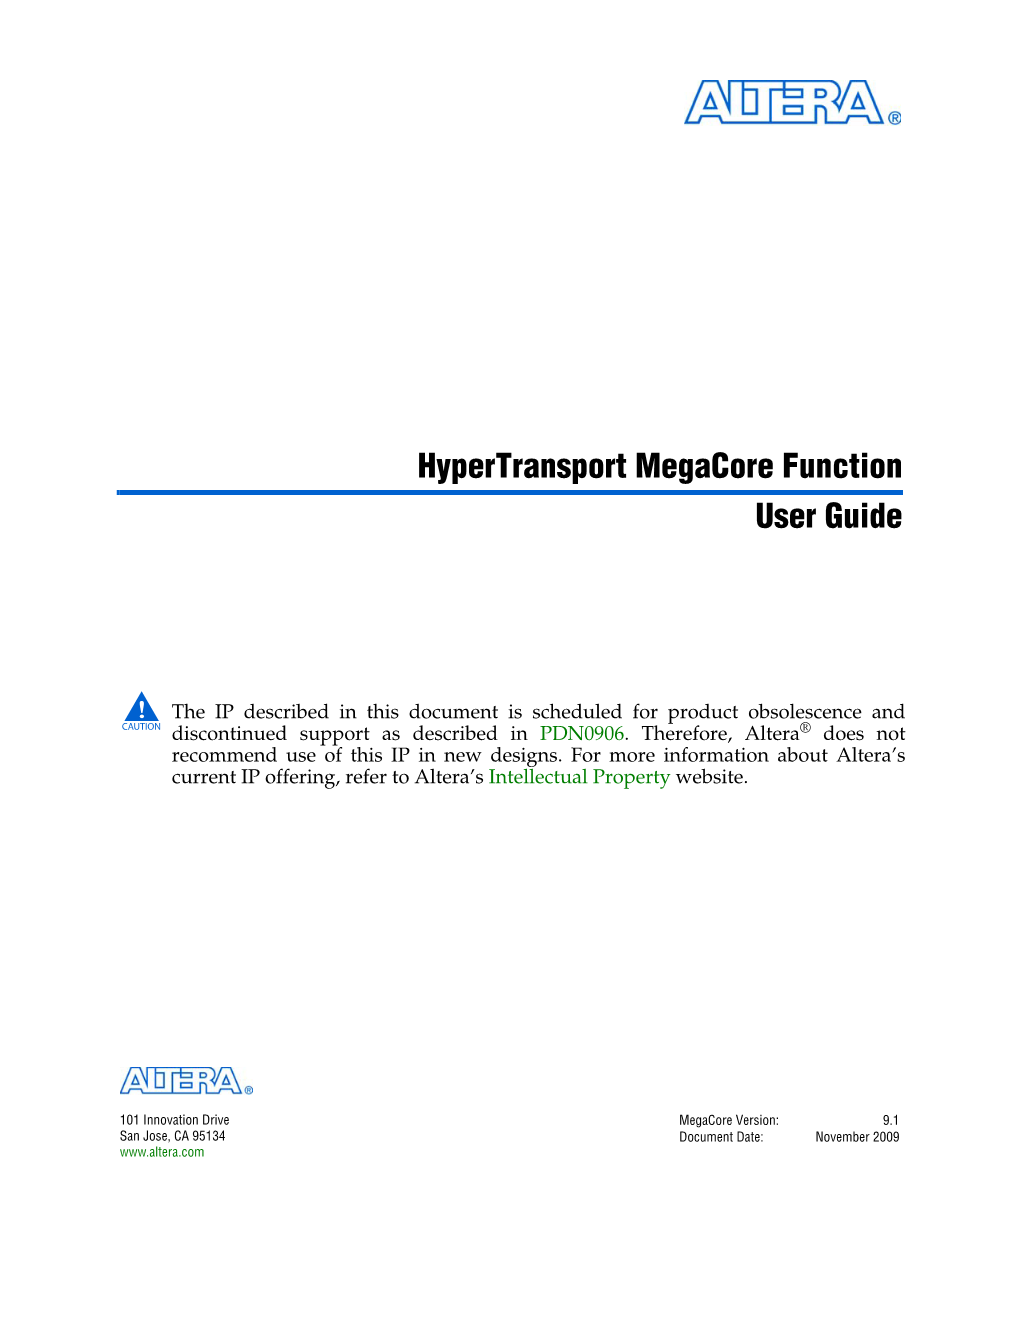 Hypertransport Megacore Function User Guide.Pdf